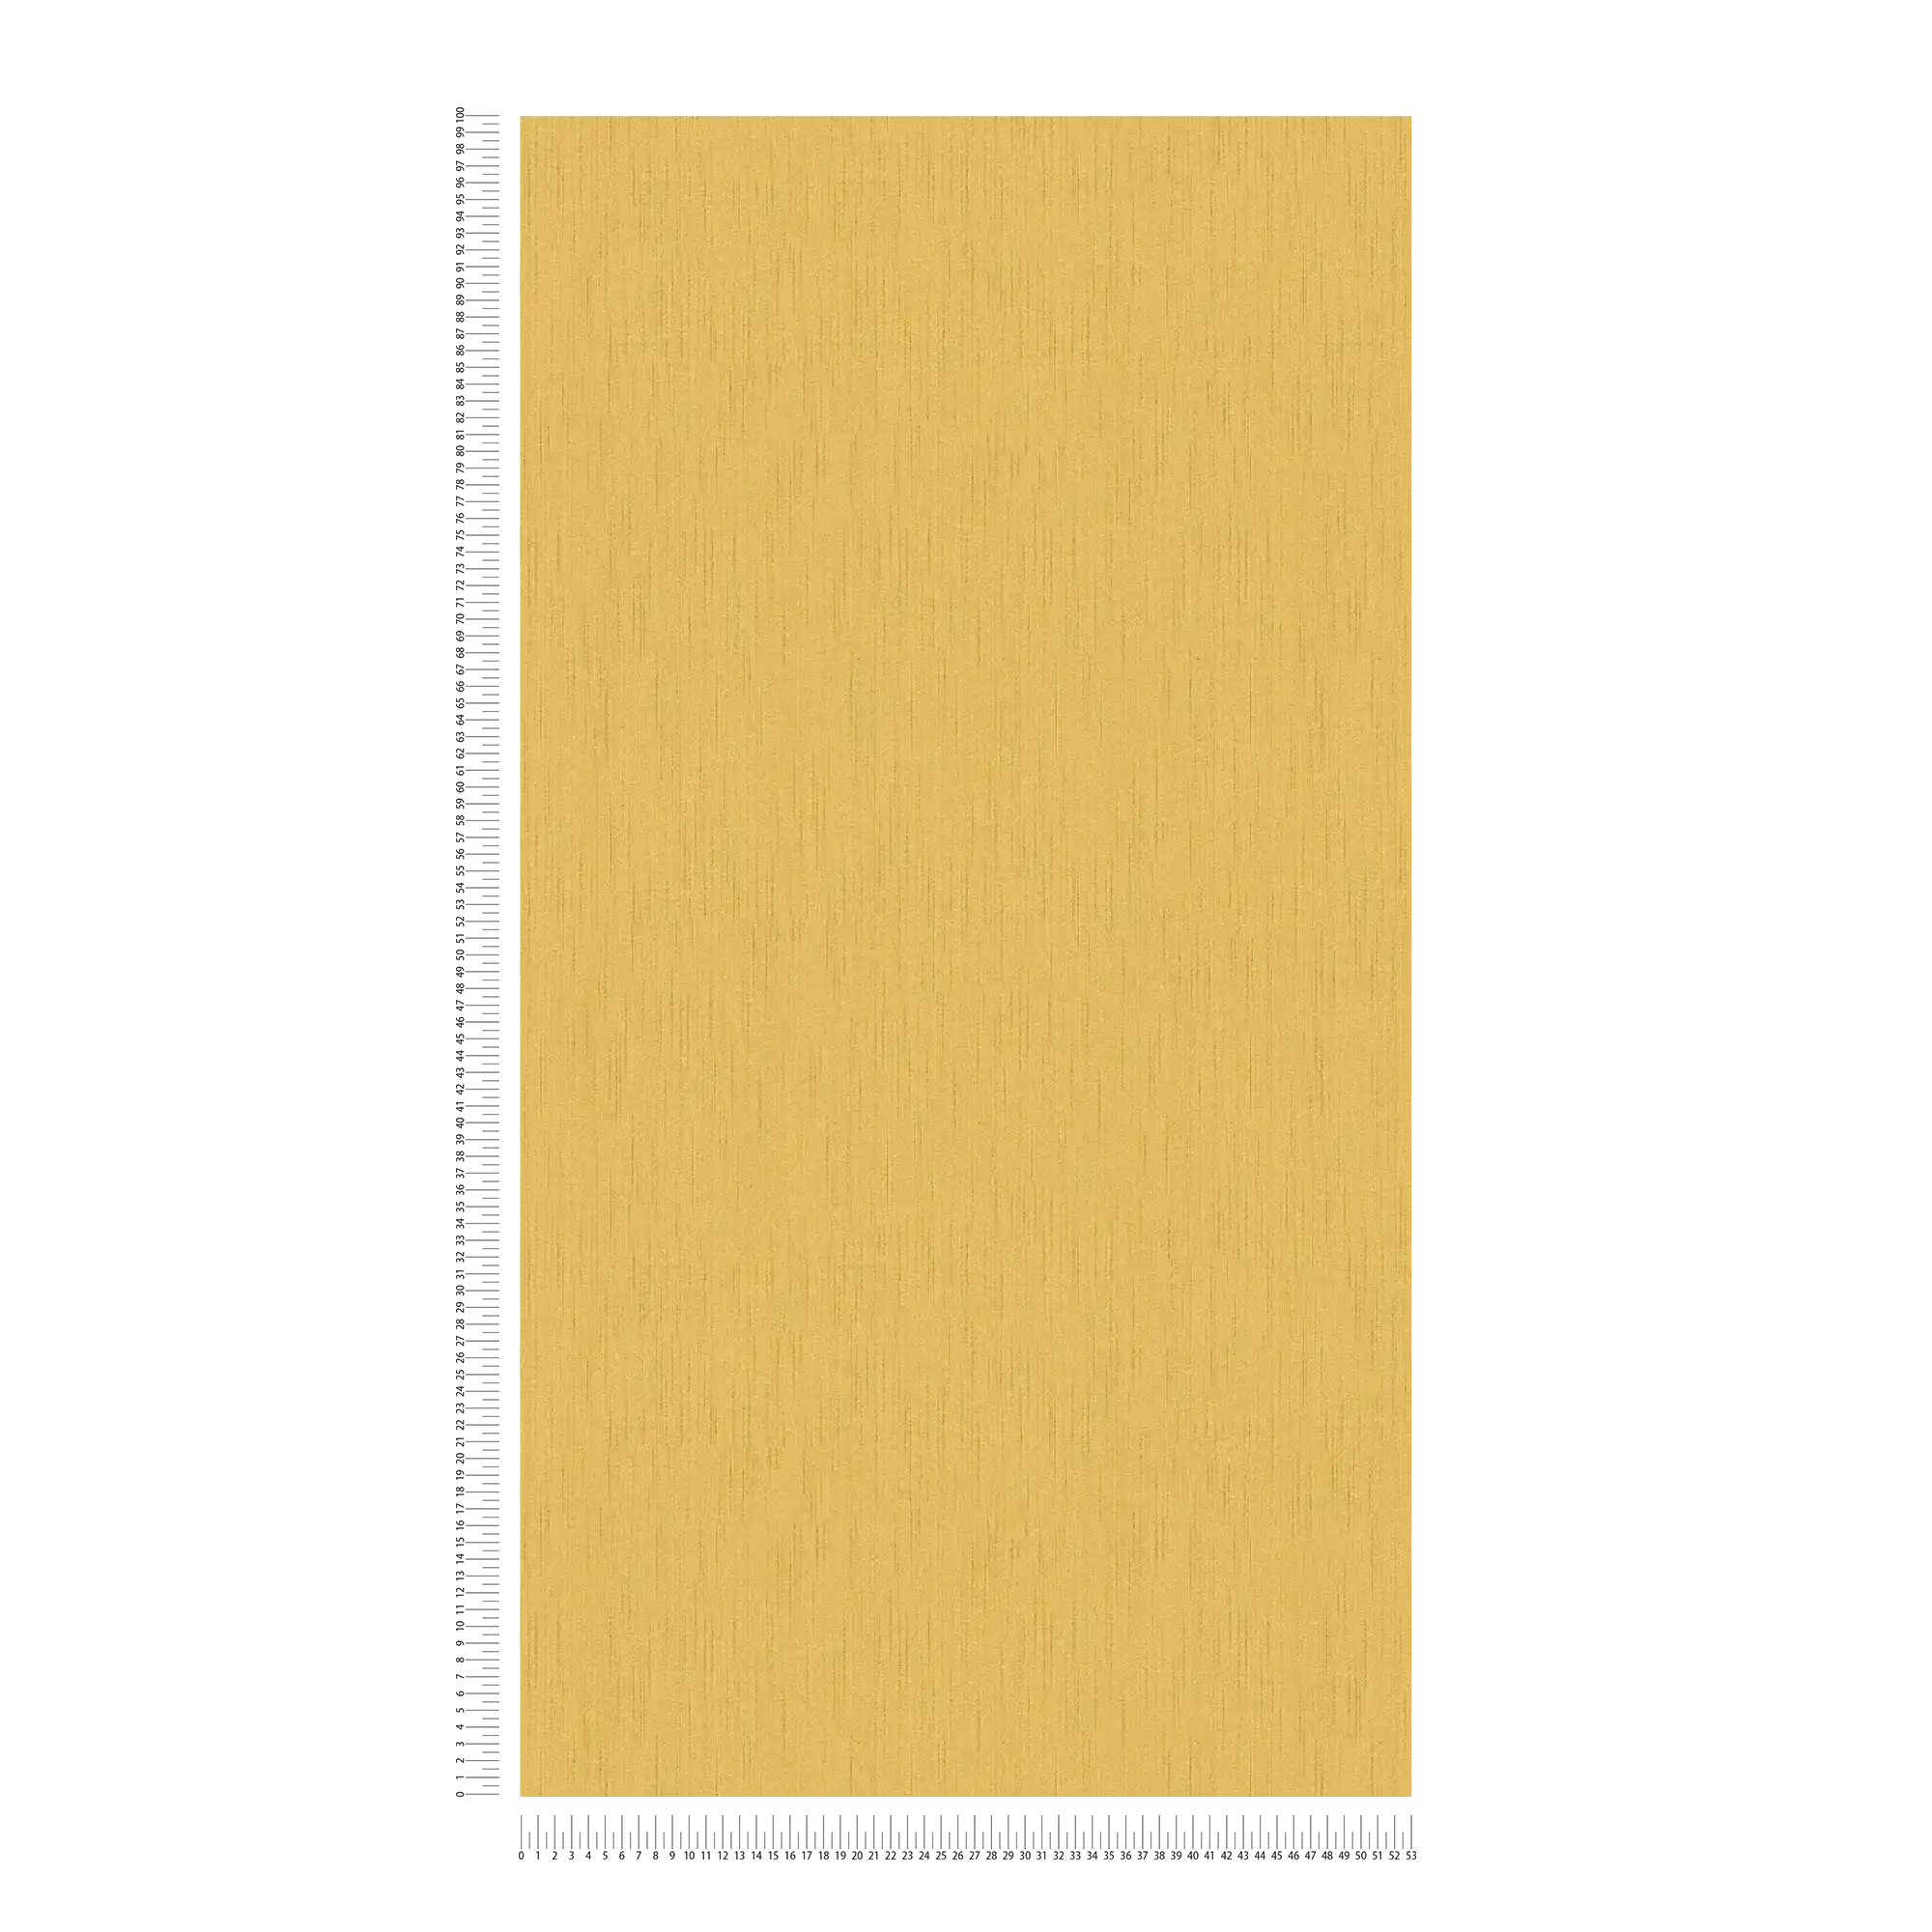             Carta da parati giallo senape in tessuto non tessuto con motivo a chiazze - giallo
        